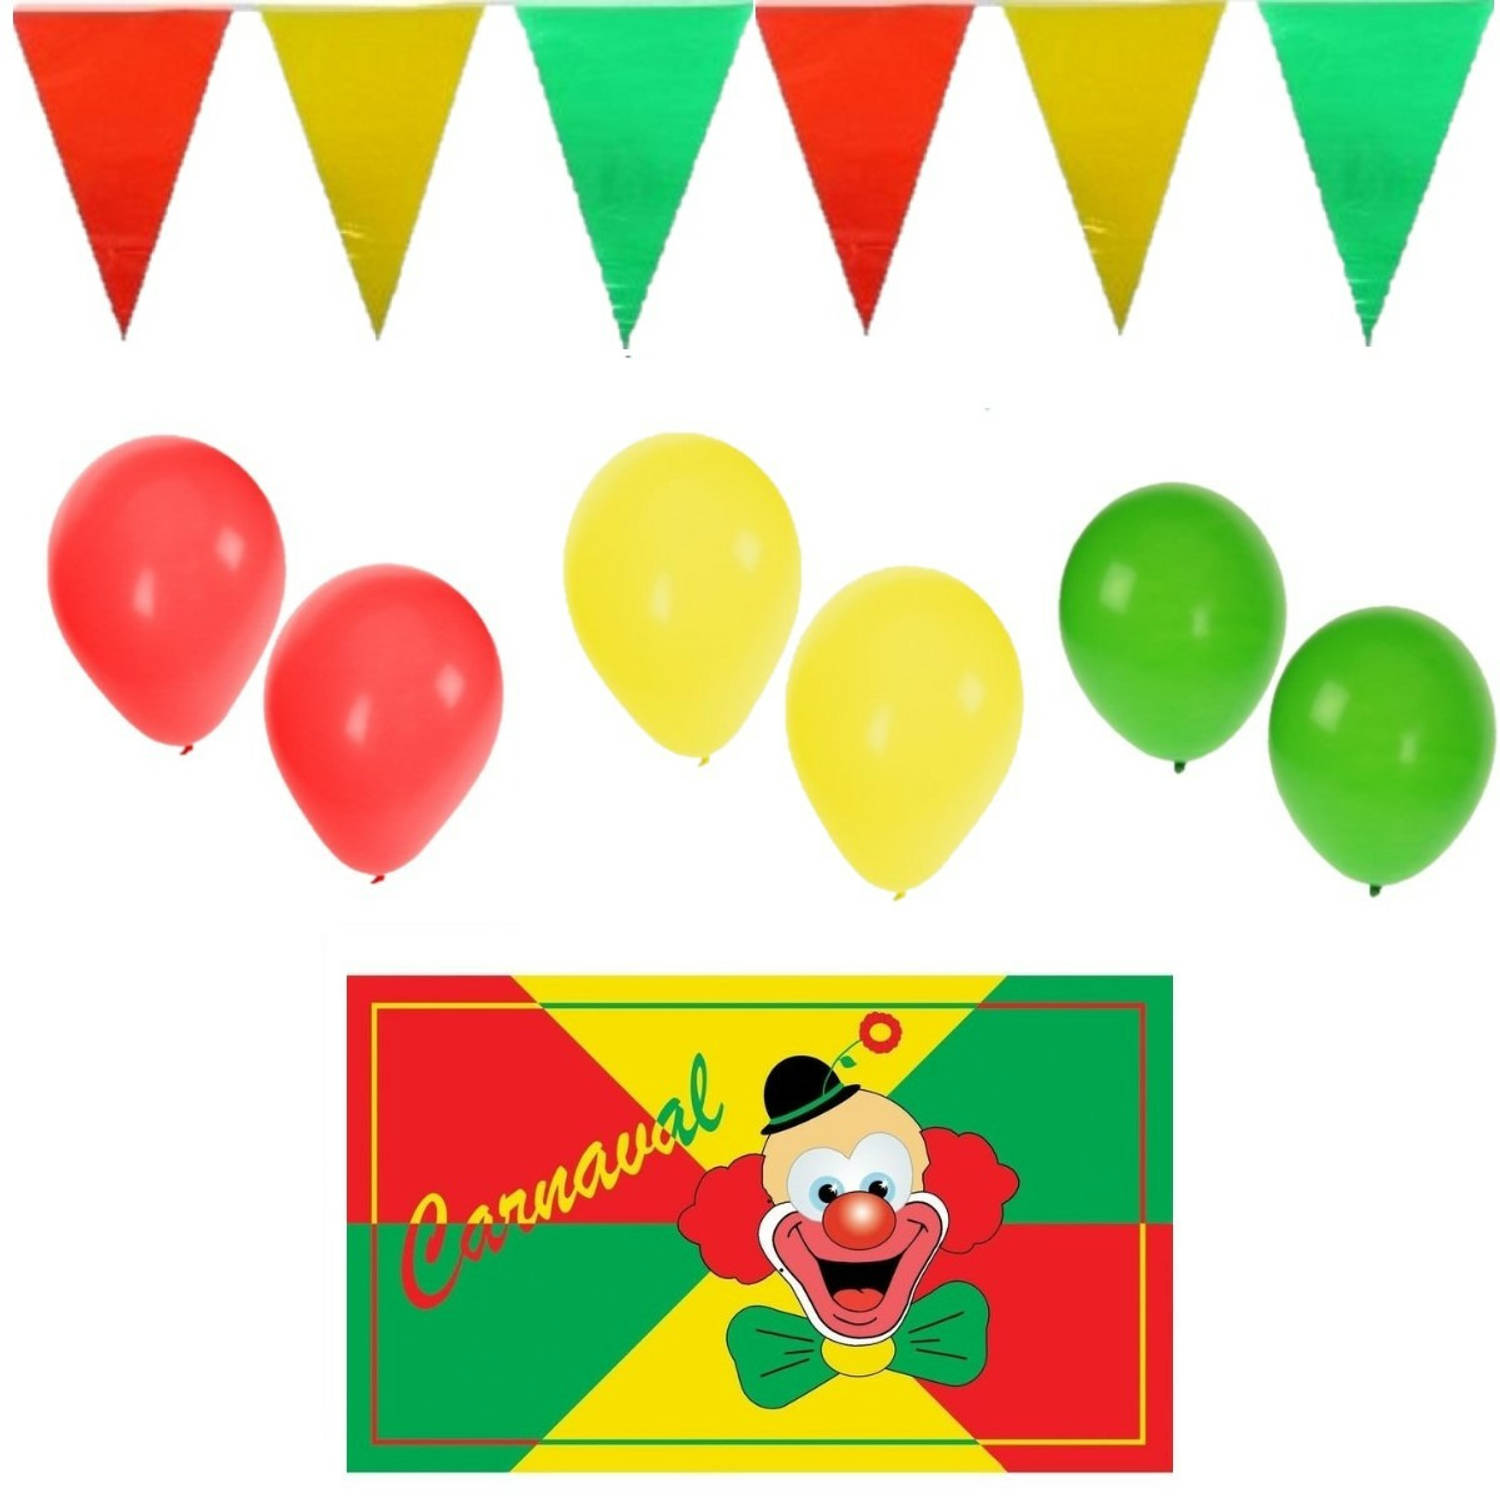 Carnaval versiering XL-pakket - 1x grote vlag /5x vlaggenlijnen/150x ballonnen - Feestpakketten